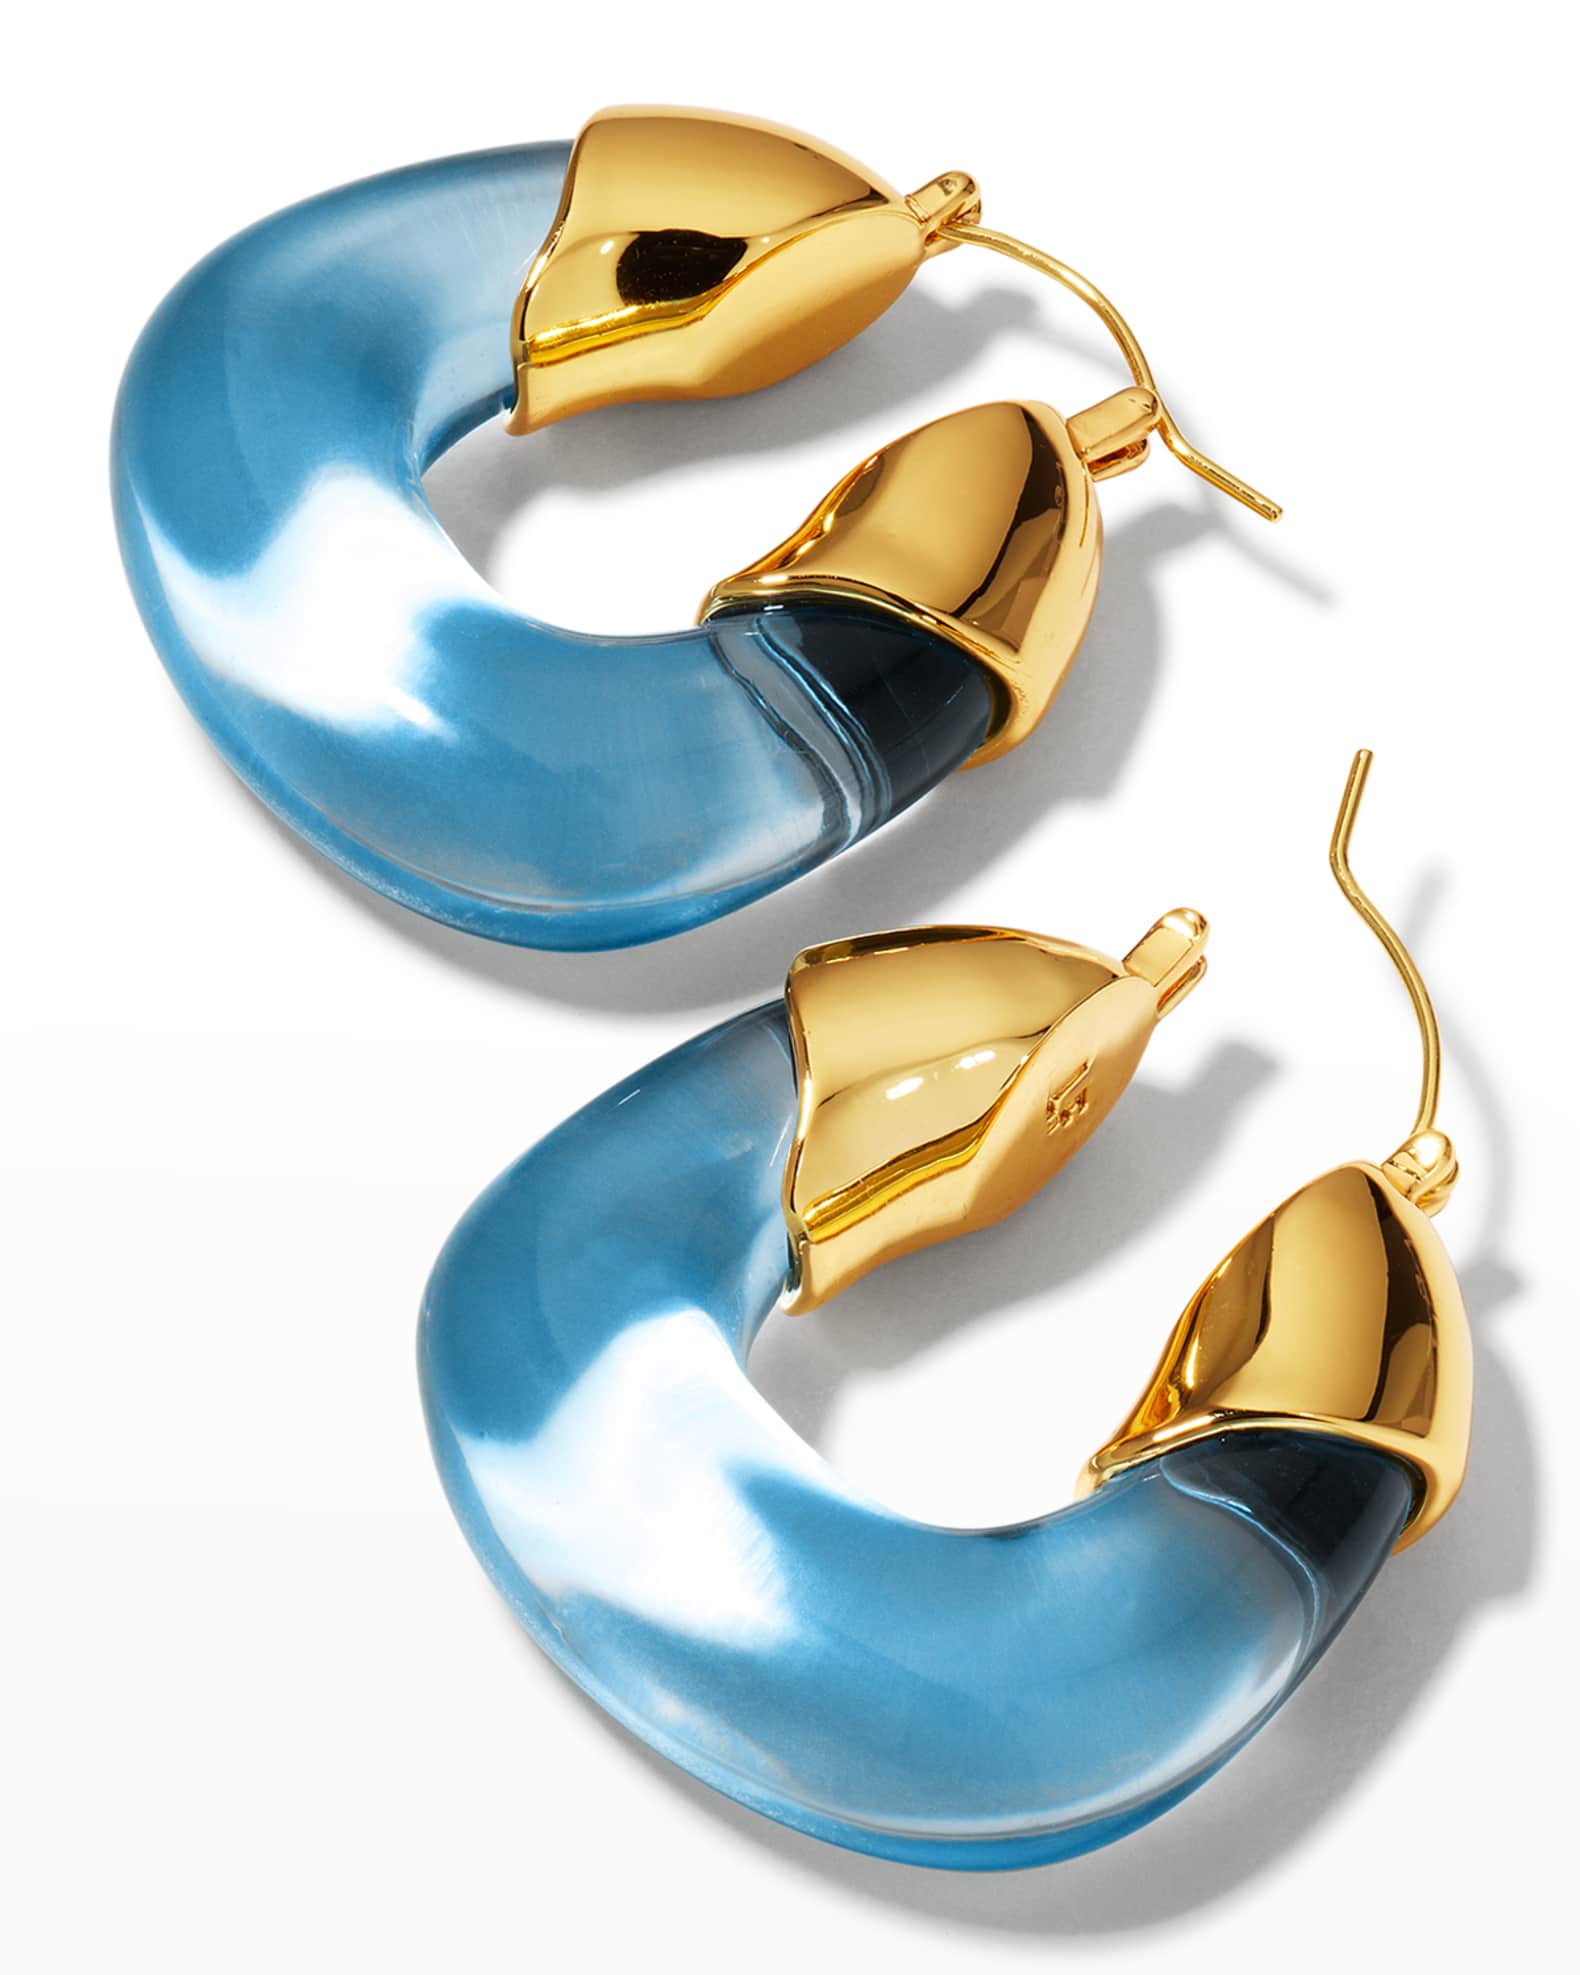 Lizzie Fortunato Organic Hoop Earrings in Turquoise | Neiman Marcus